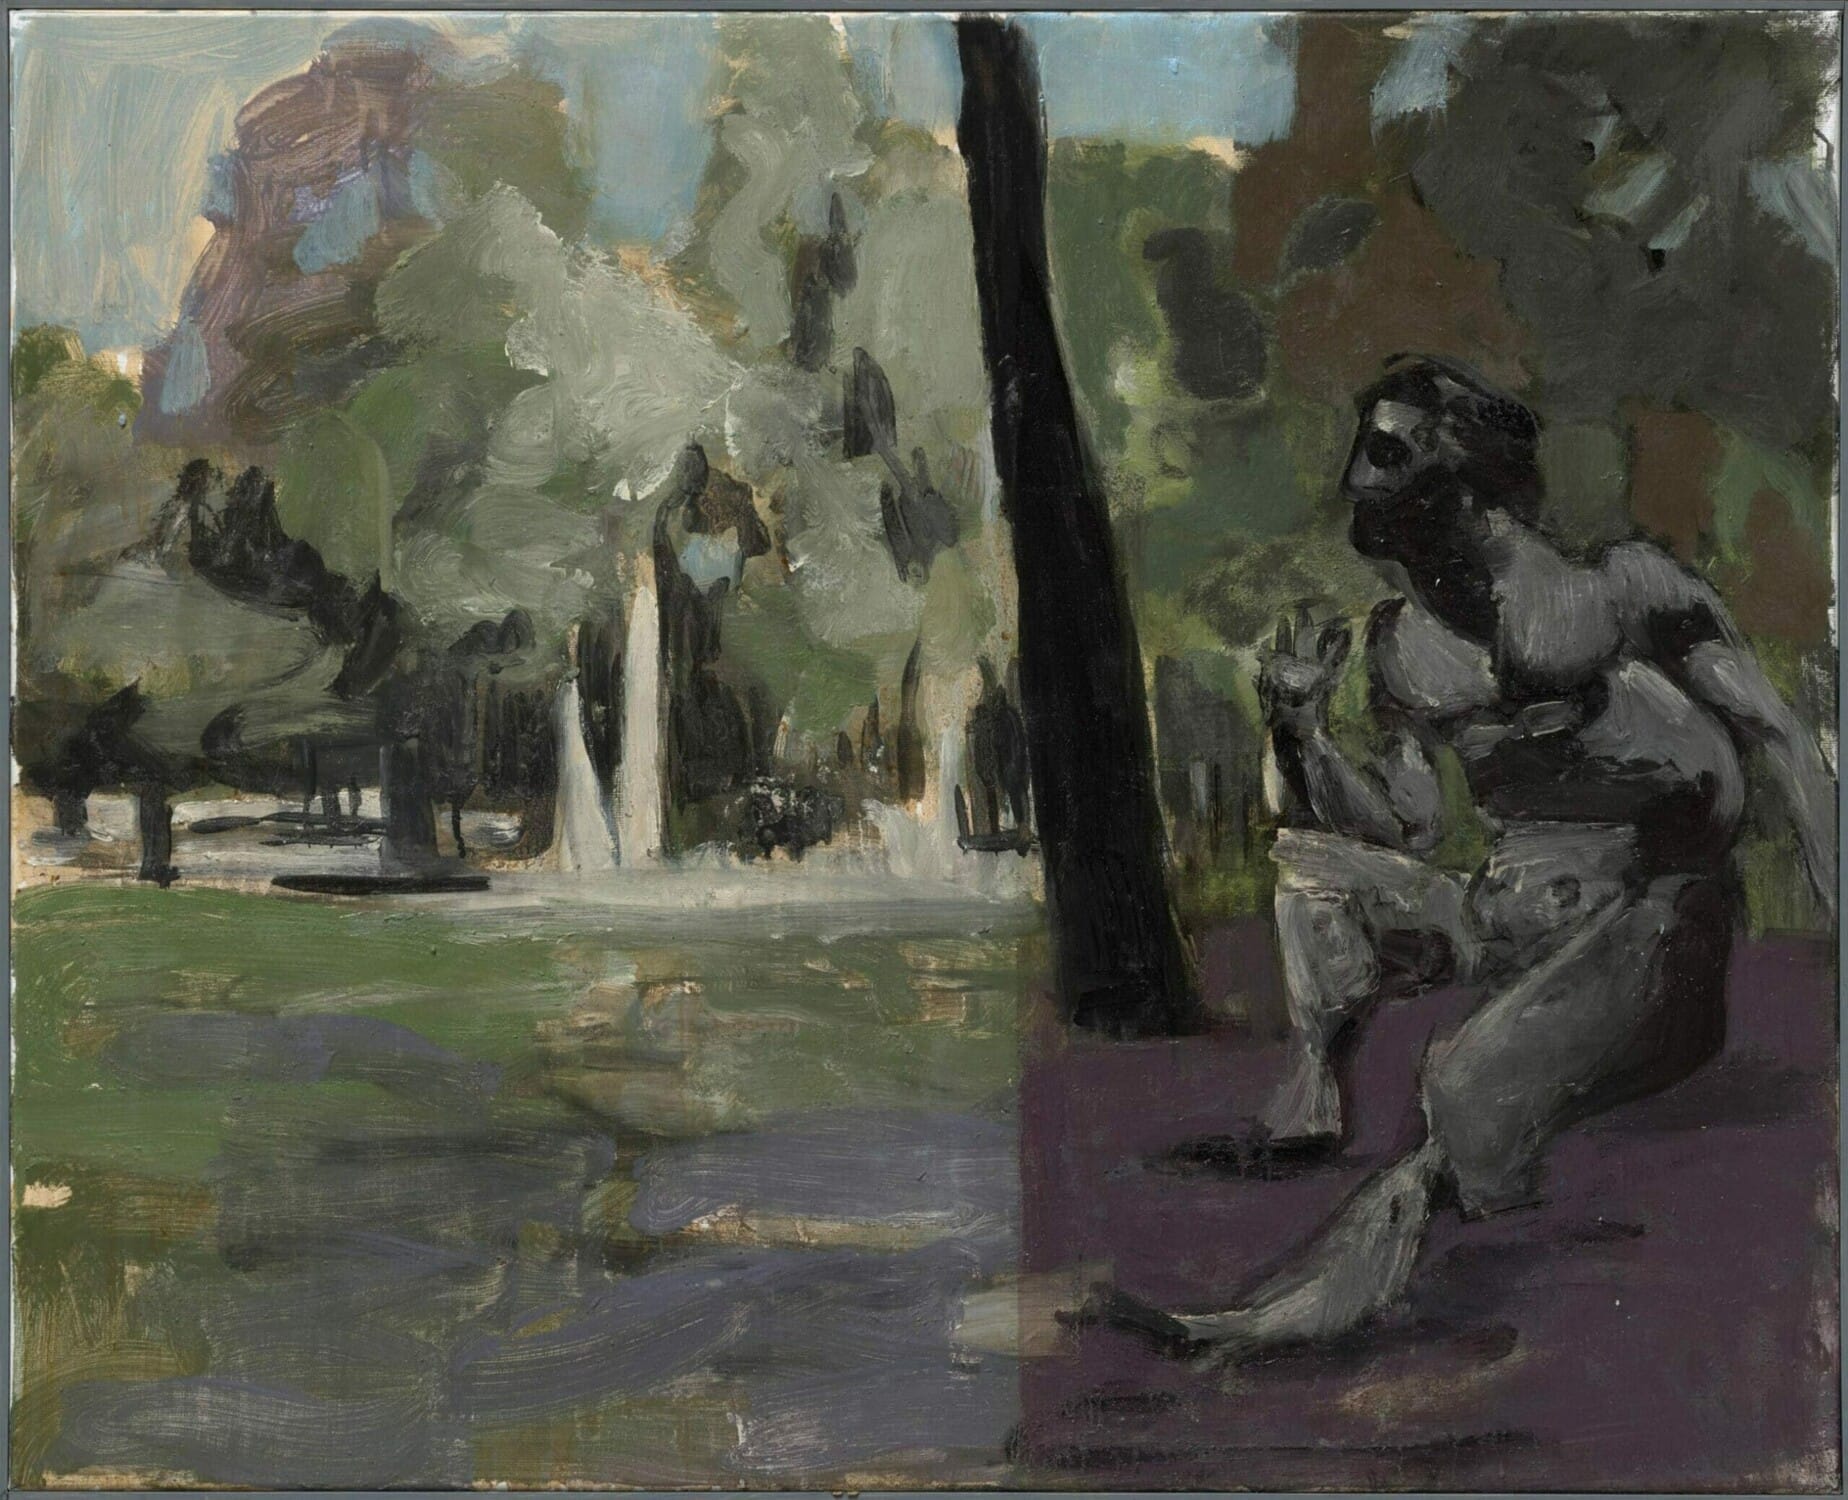 Markus Lüpertz, "Adam", 2020. Mixed media on canvas in artist's frame, 32 x 39 1/4 inches (81 x 100 cm)